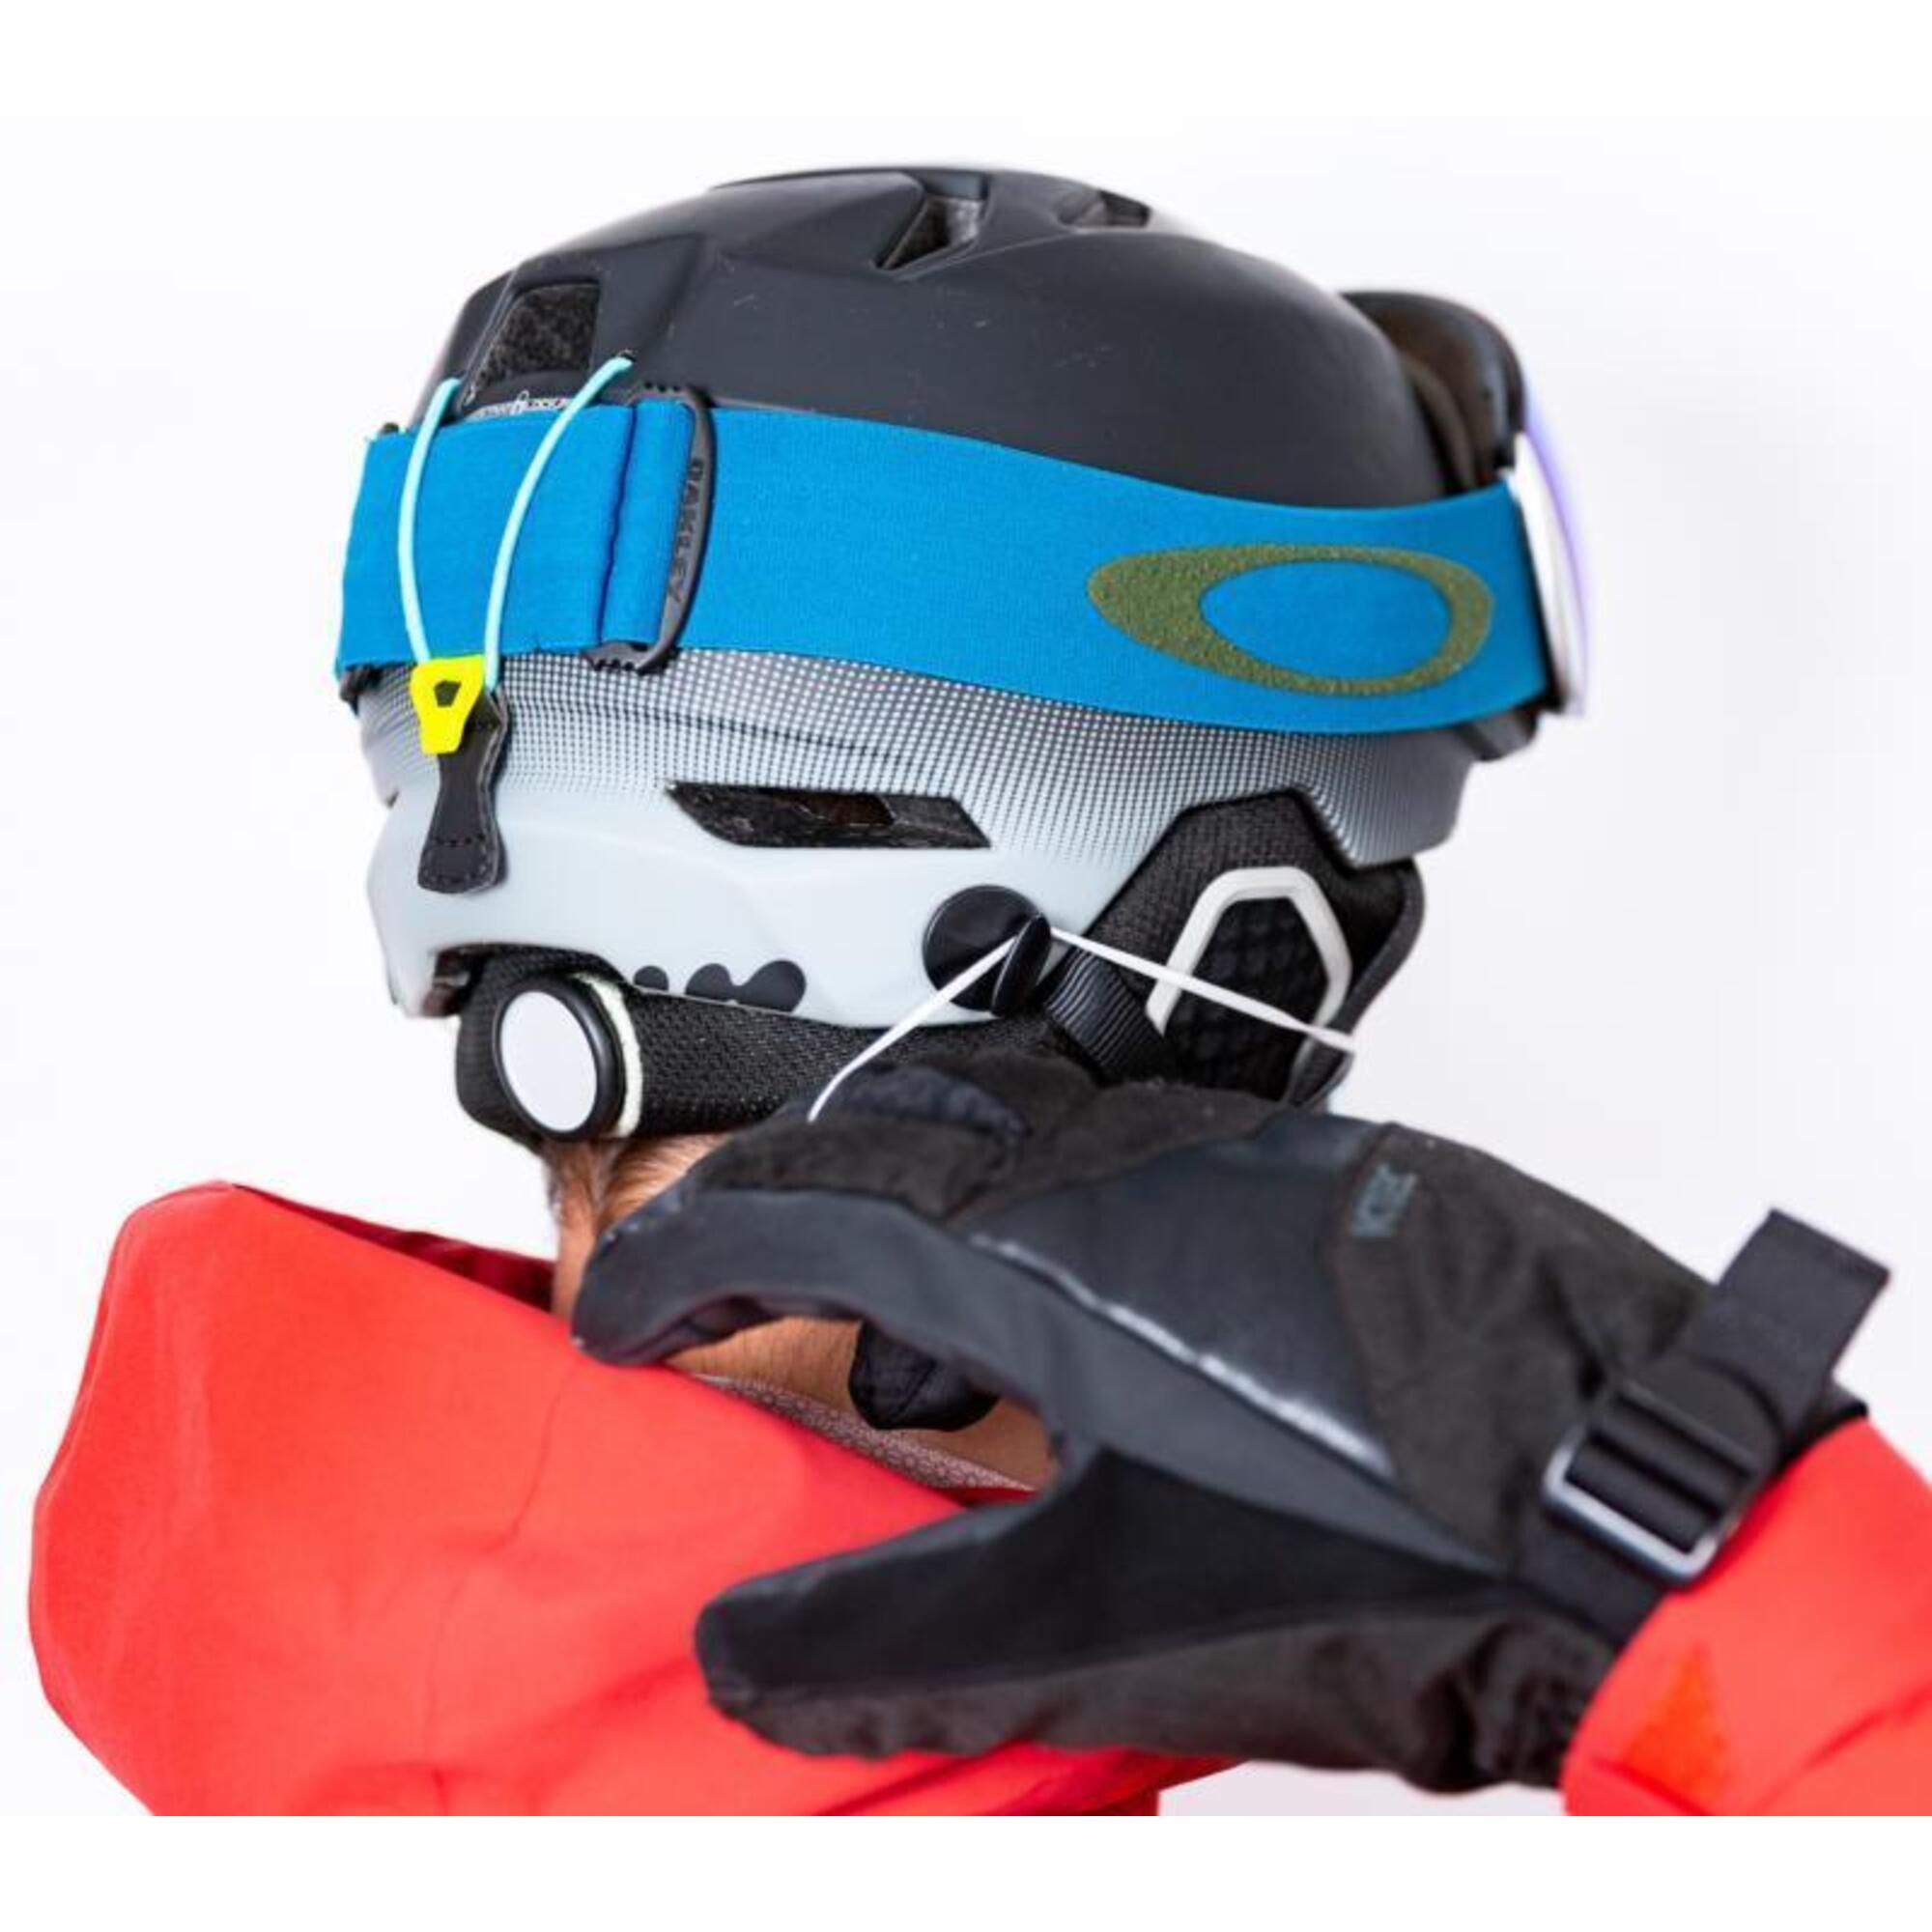 Porte-masque pour casque de ski (Pack 4) - Adulte - SKEARS4